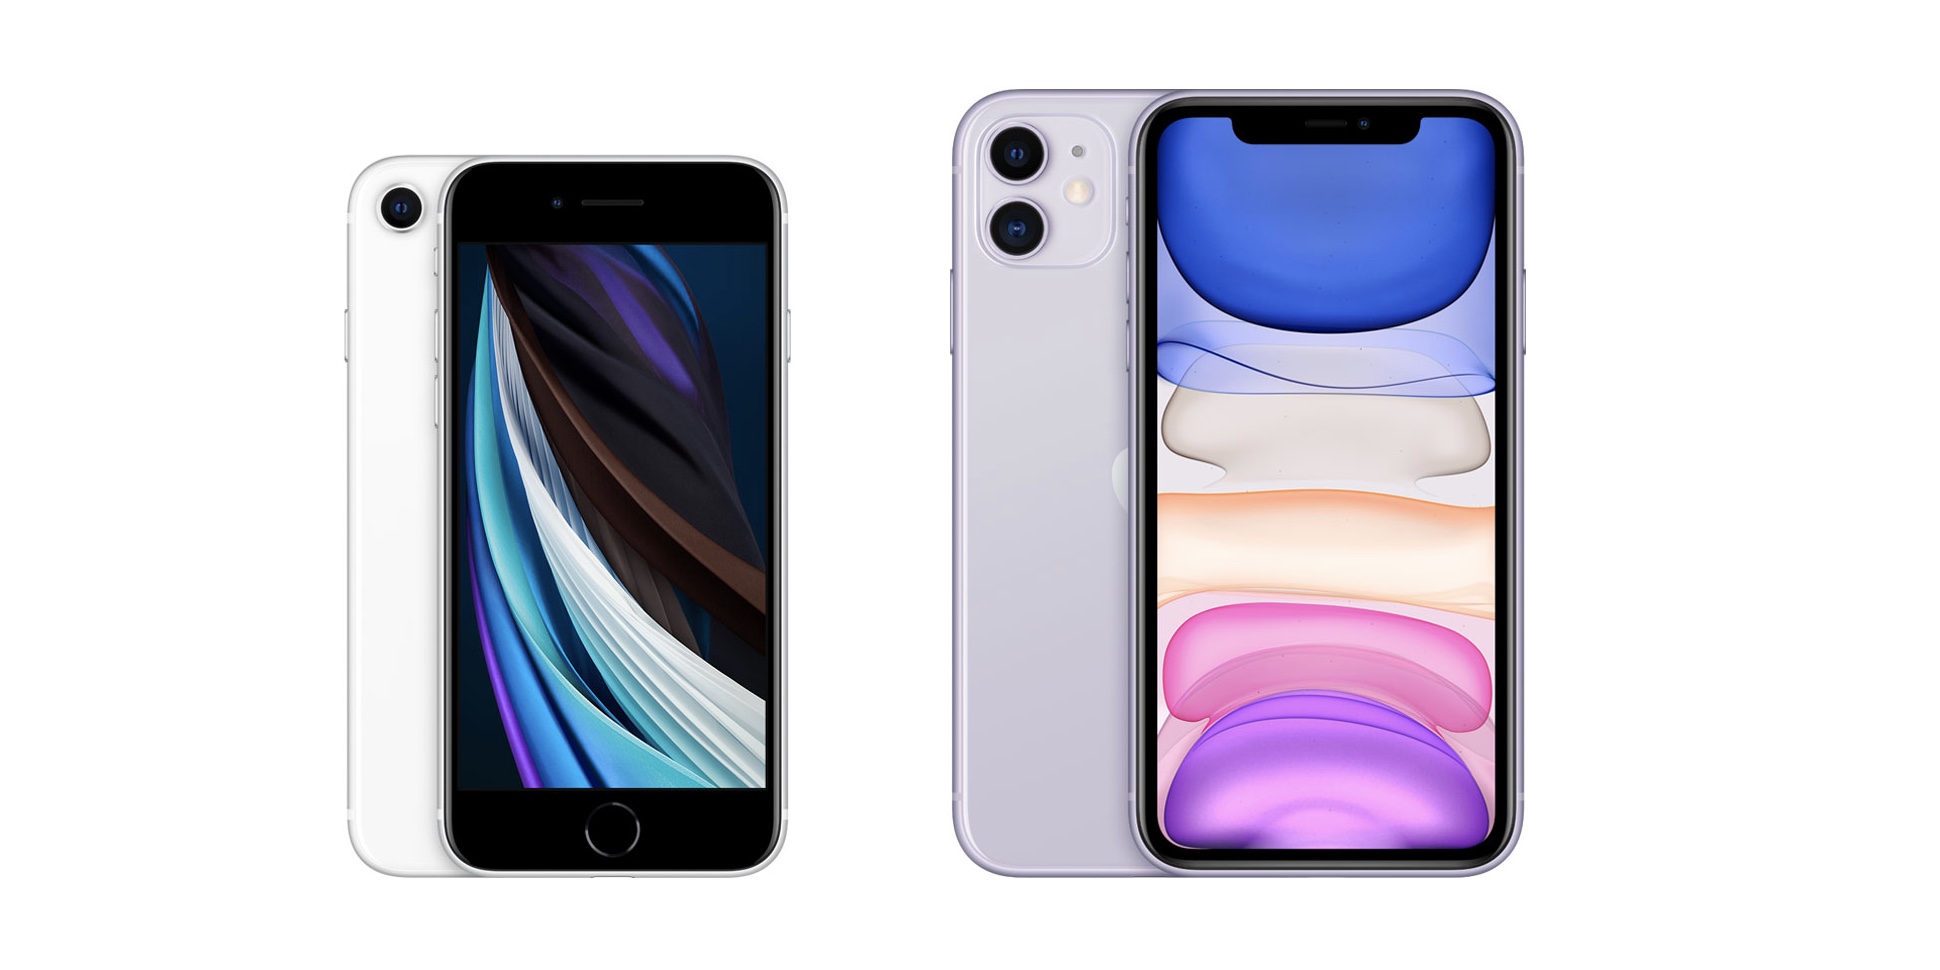 iPhone SE 2020 vs iPhone 11